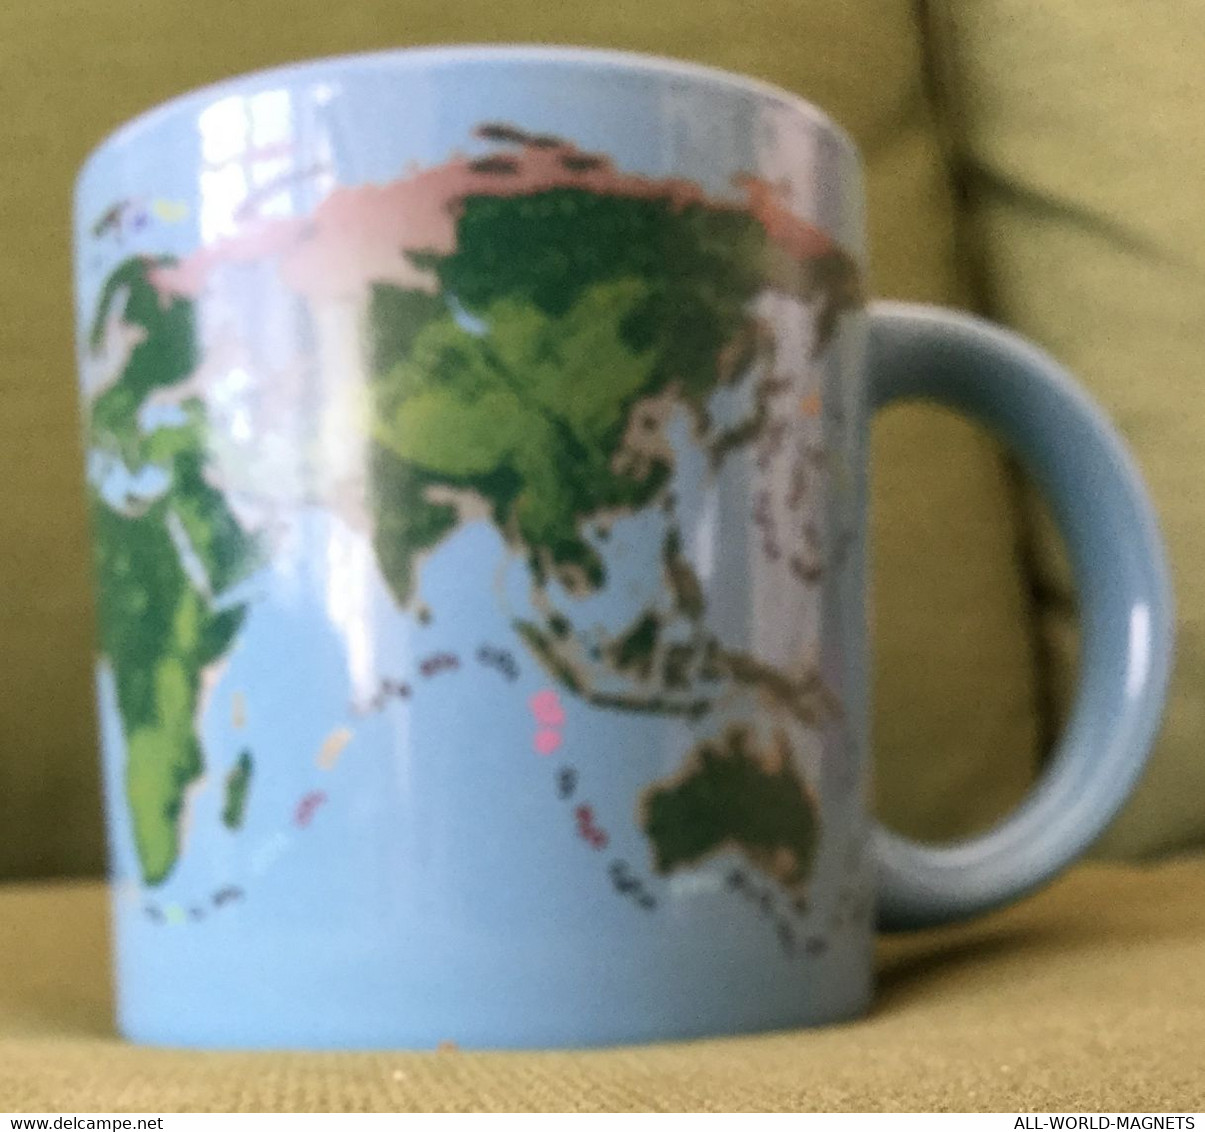 Porcelain Mug Global Warming Mug Earth's greenhouse gases and Hole in the Ozone